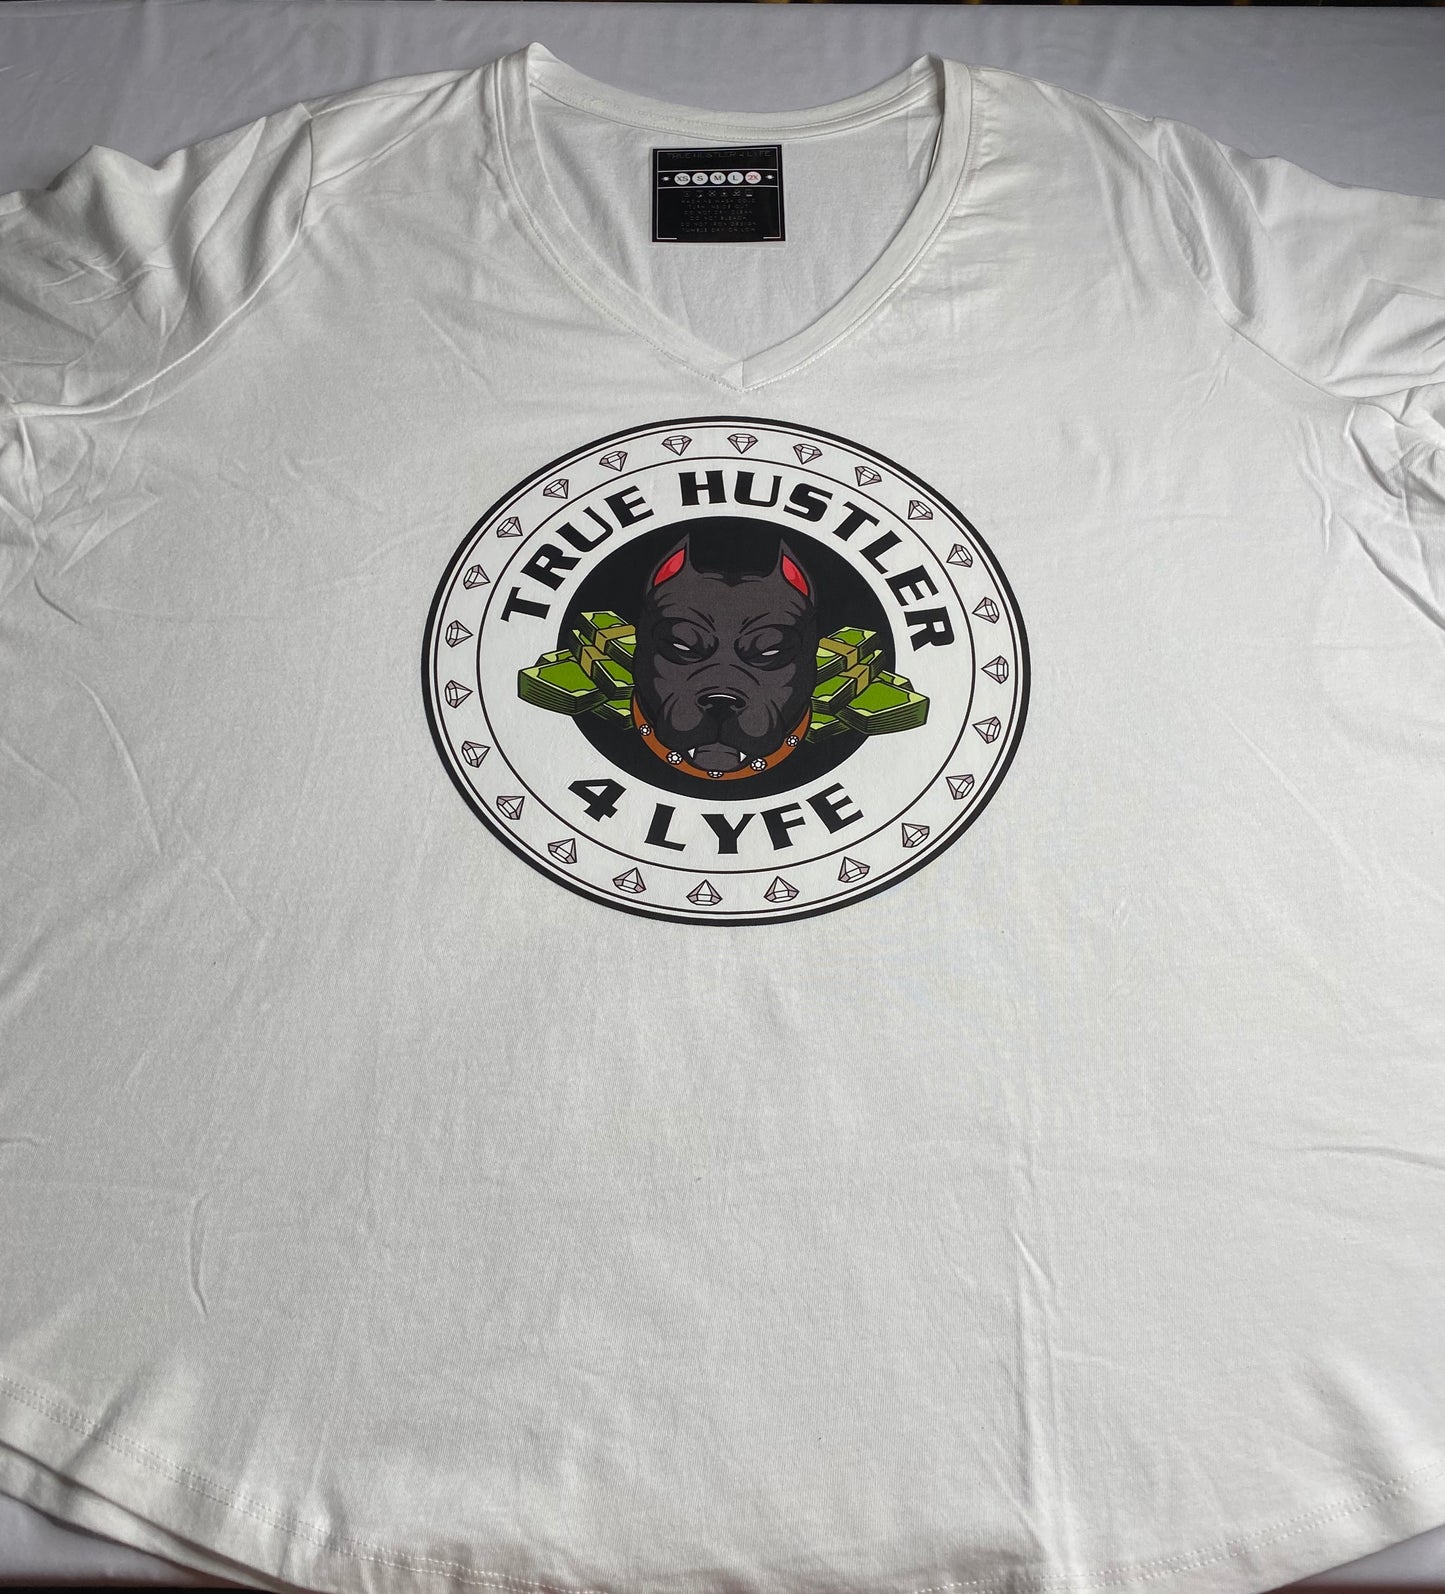 True Hustler 4 Lyfe 2 Piece Short Set - Black Fleece Shorts & White Cotton V-Neck Shirt